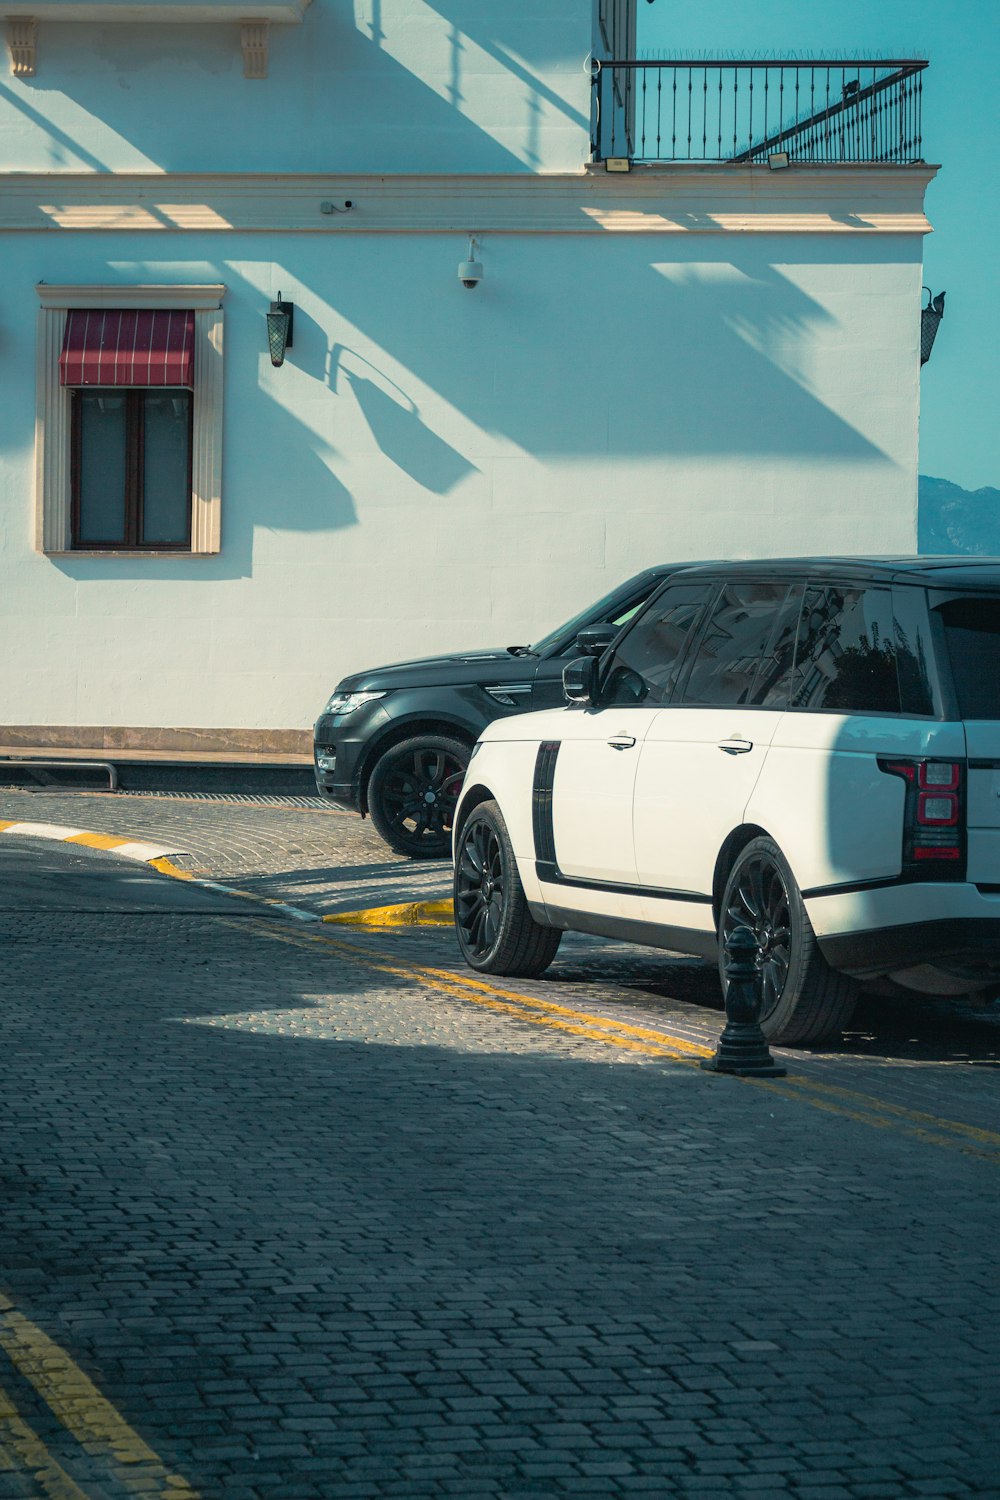 Un Range Rover aparcado frente a un edificio blanco